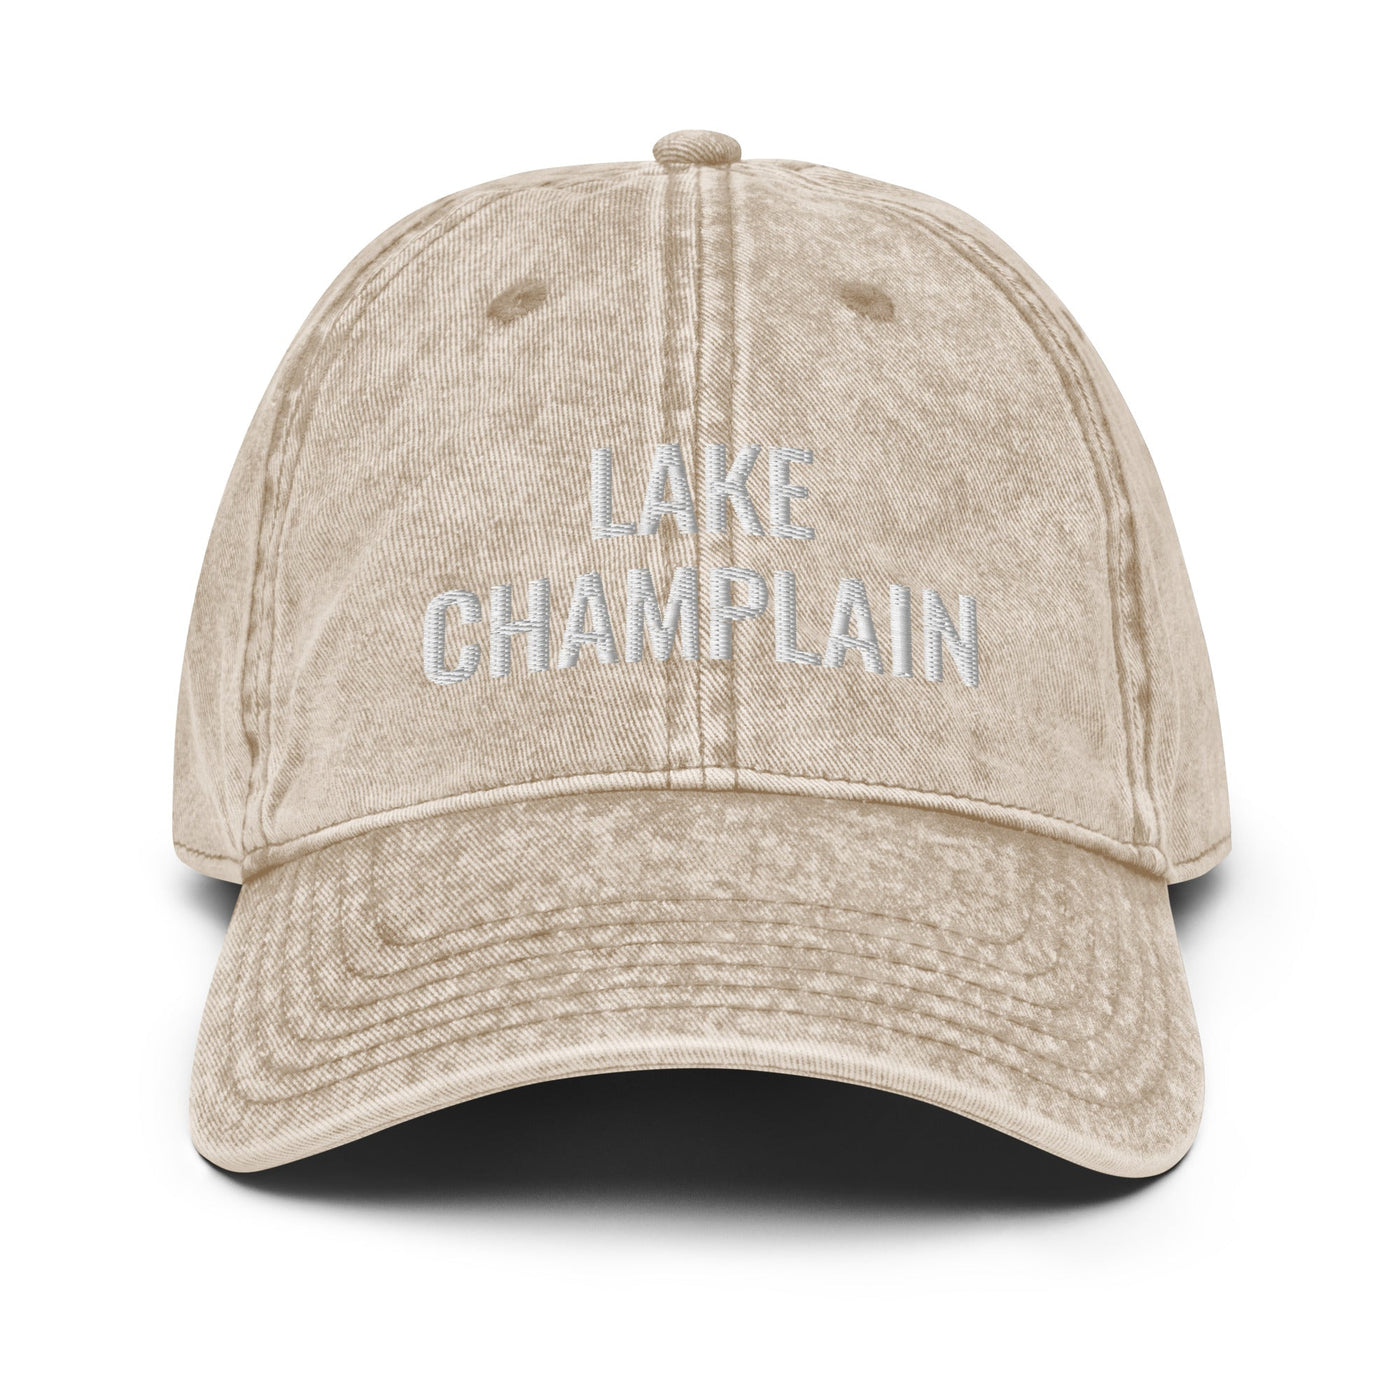 Lake Champlain Hat - Ezra's Clothing